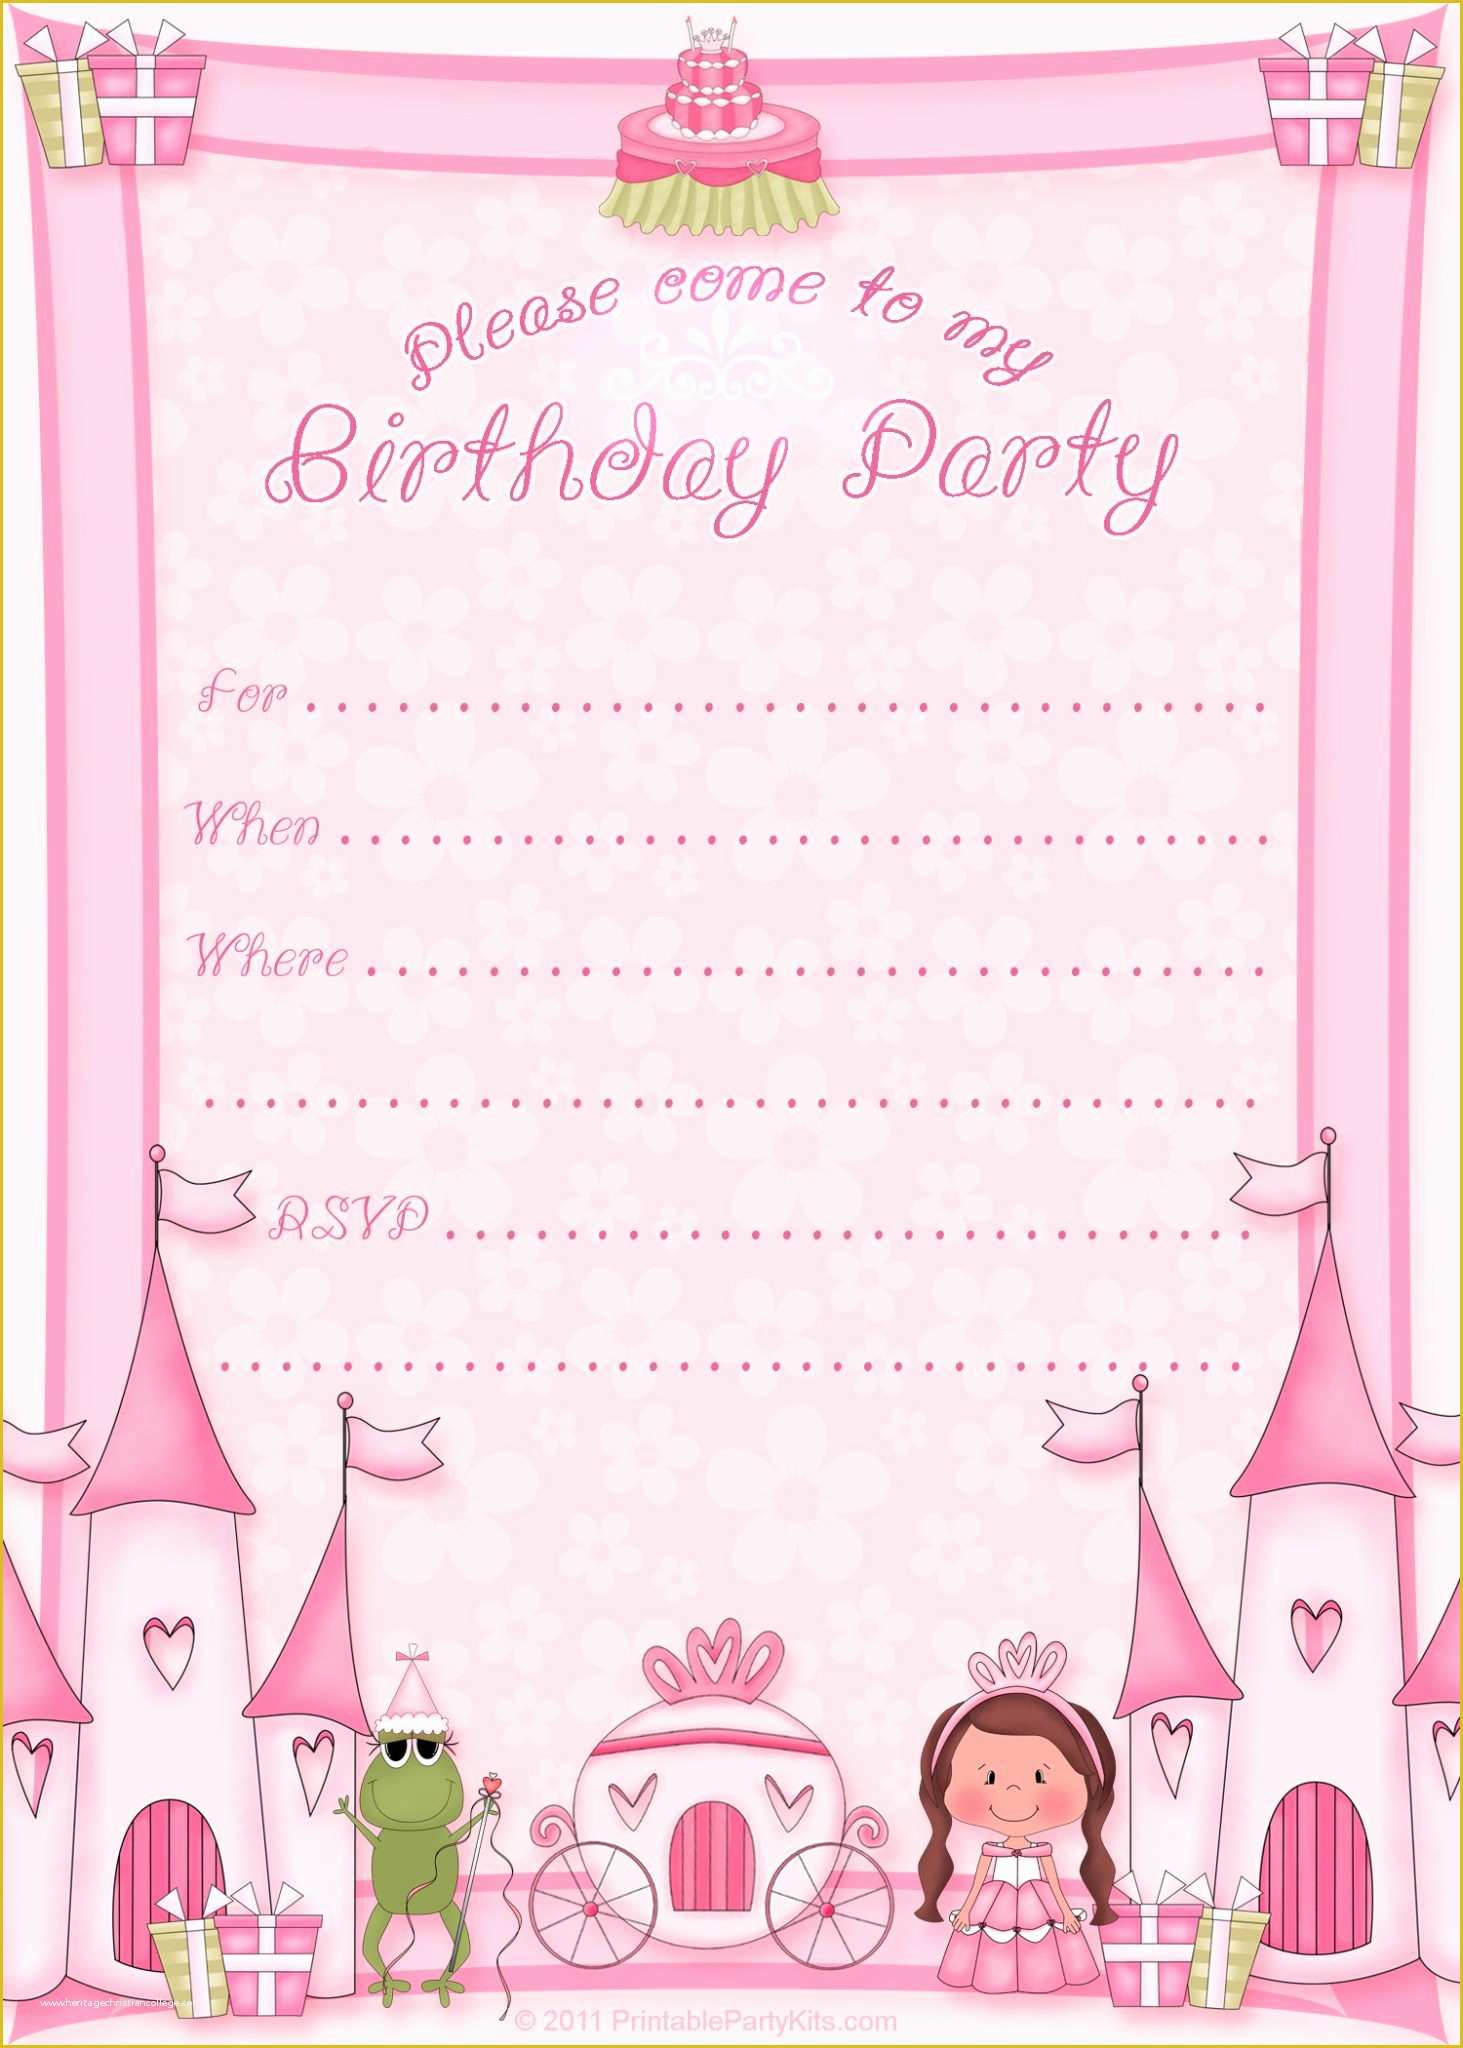 Free Birthday Party Invitation Templates Of 100 Free Birthday Invitation Templates You Will Love